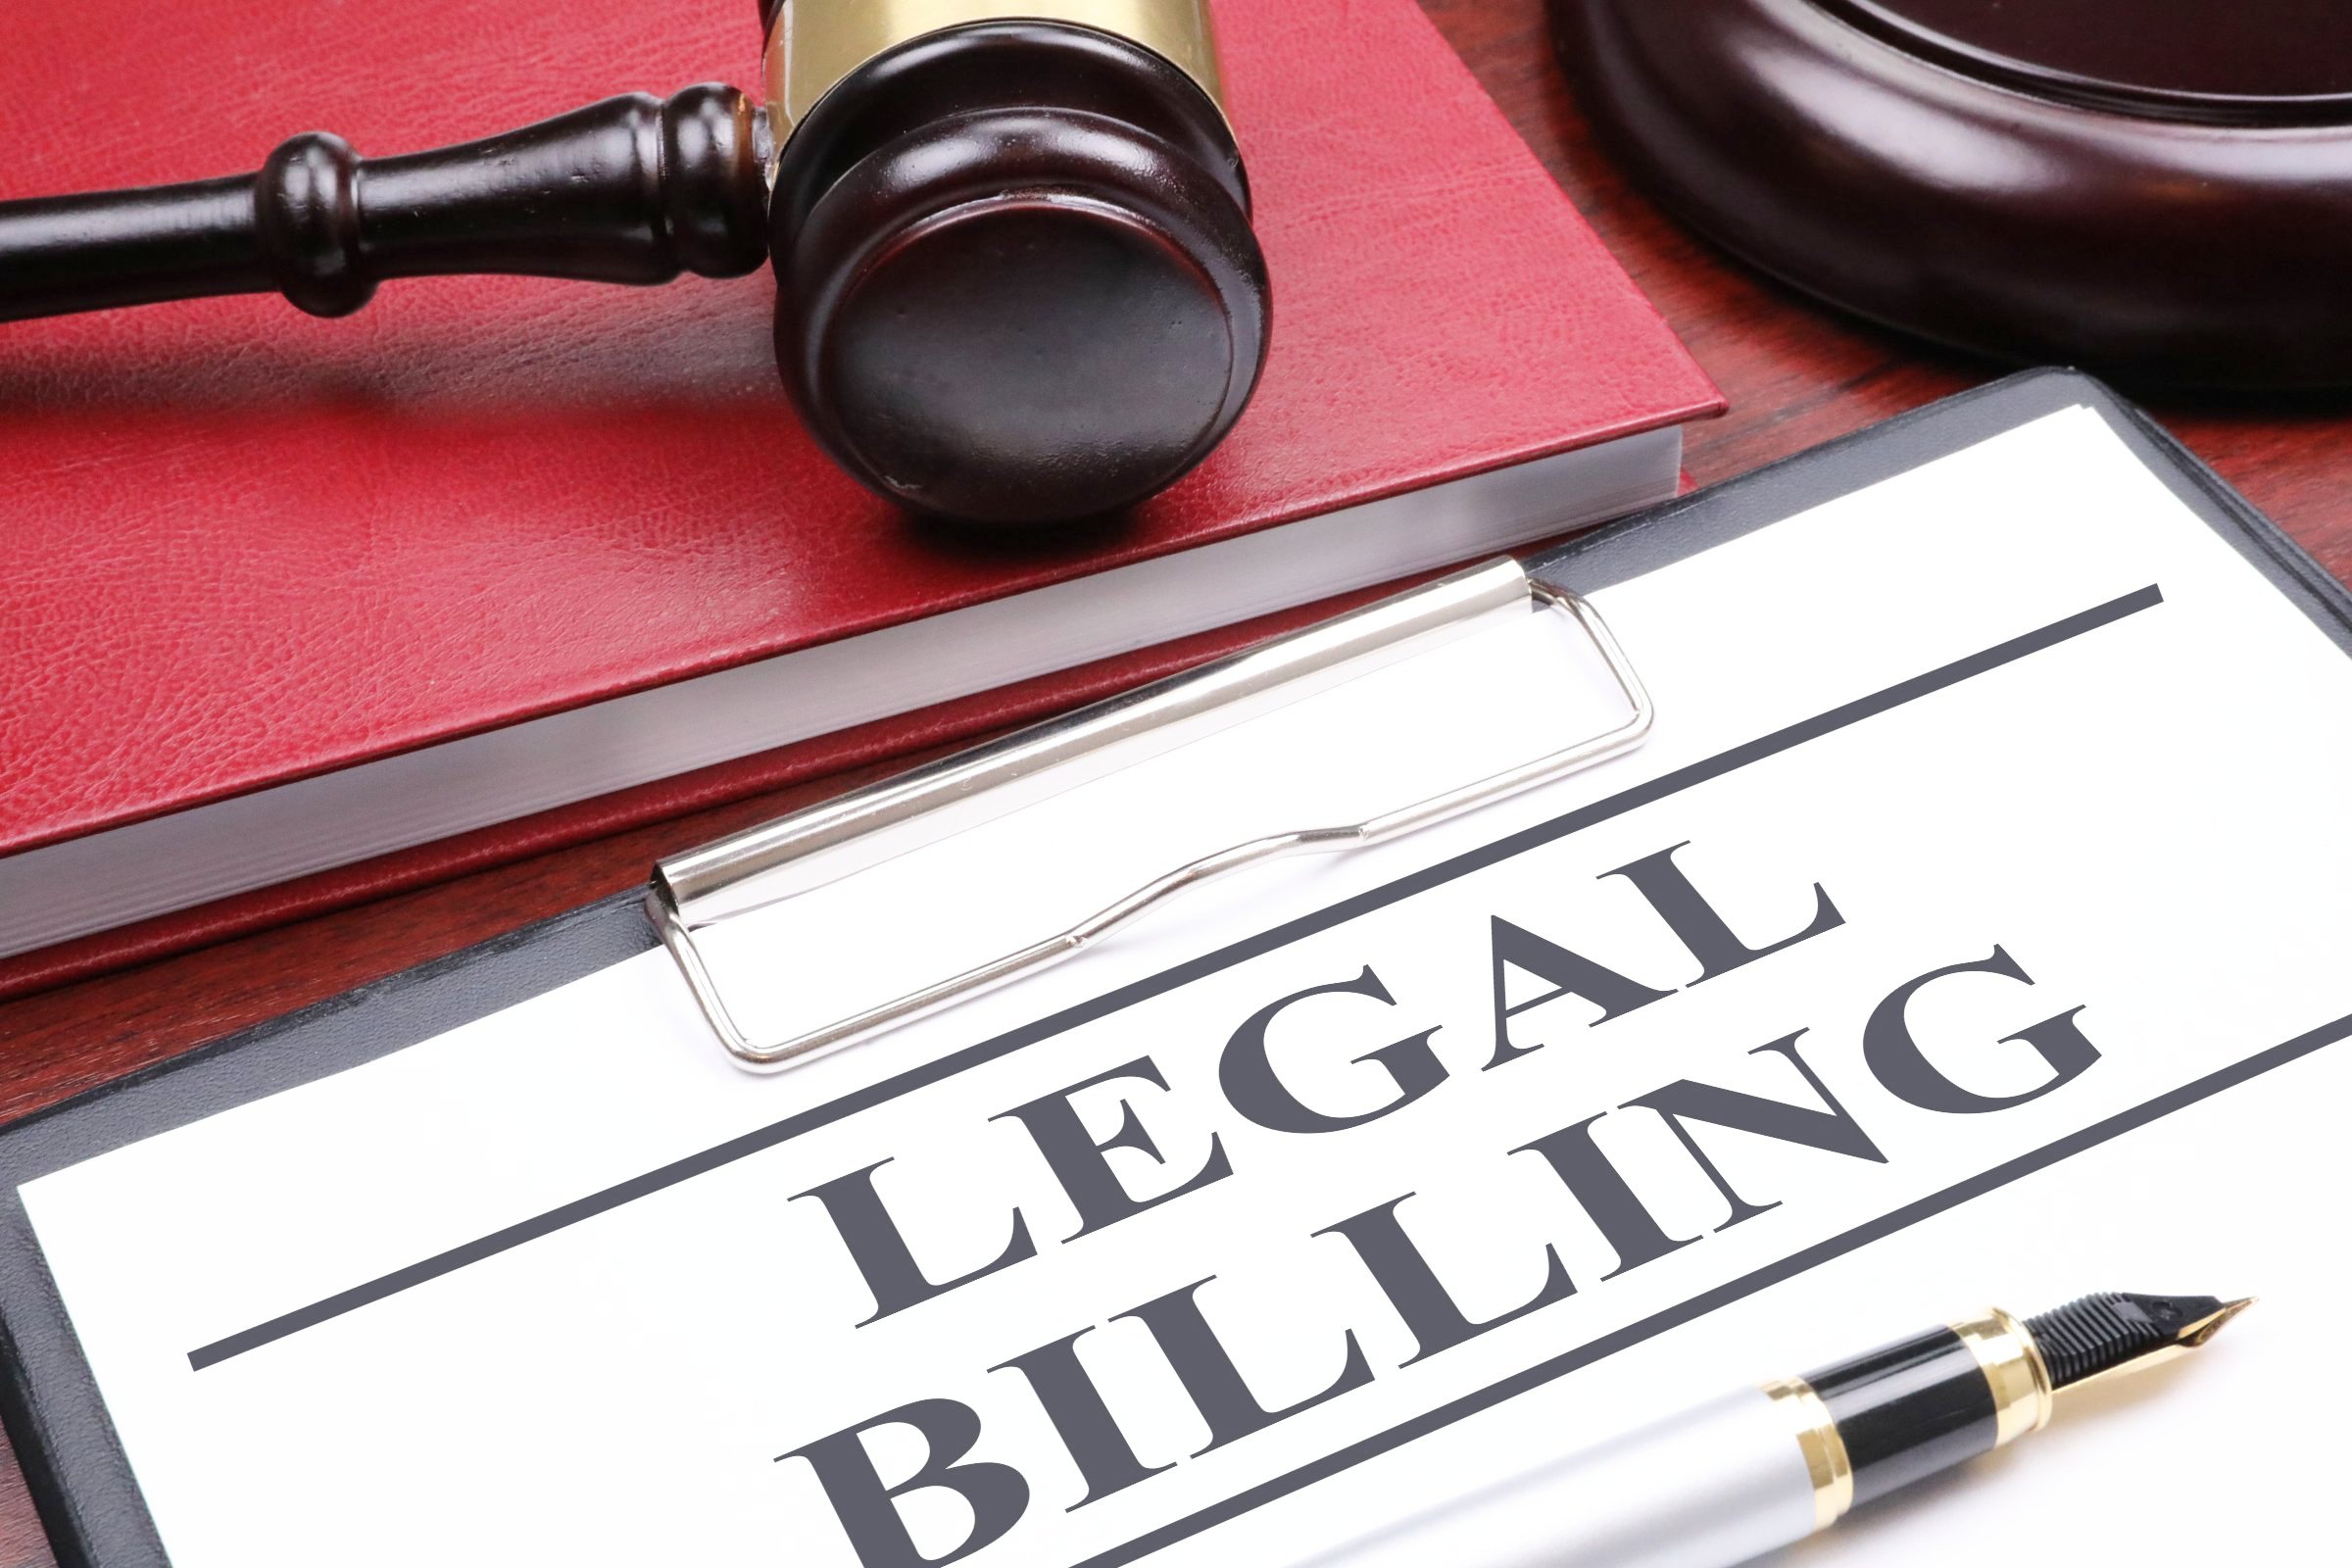 legal billing